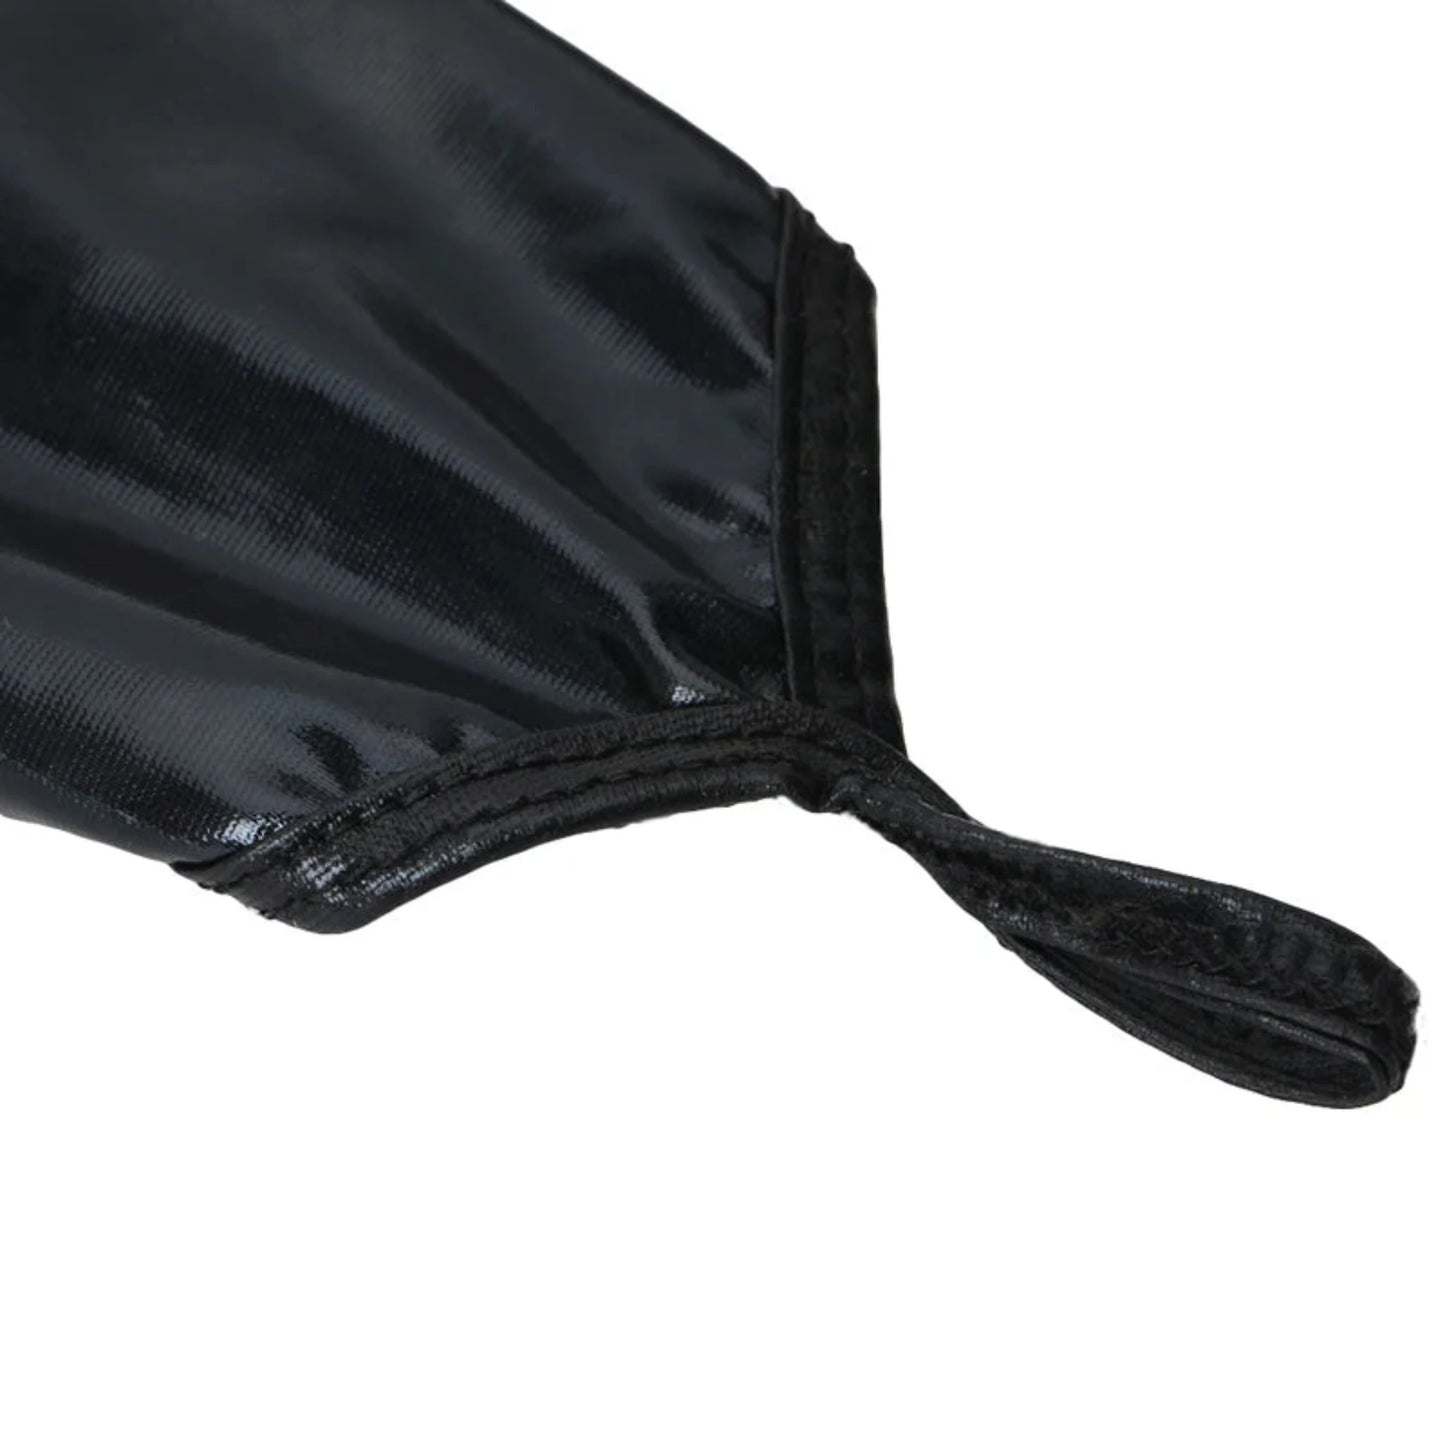 Black Metallic Synthetic Leather Arm Sleeves